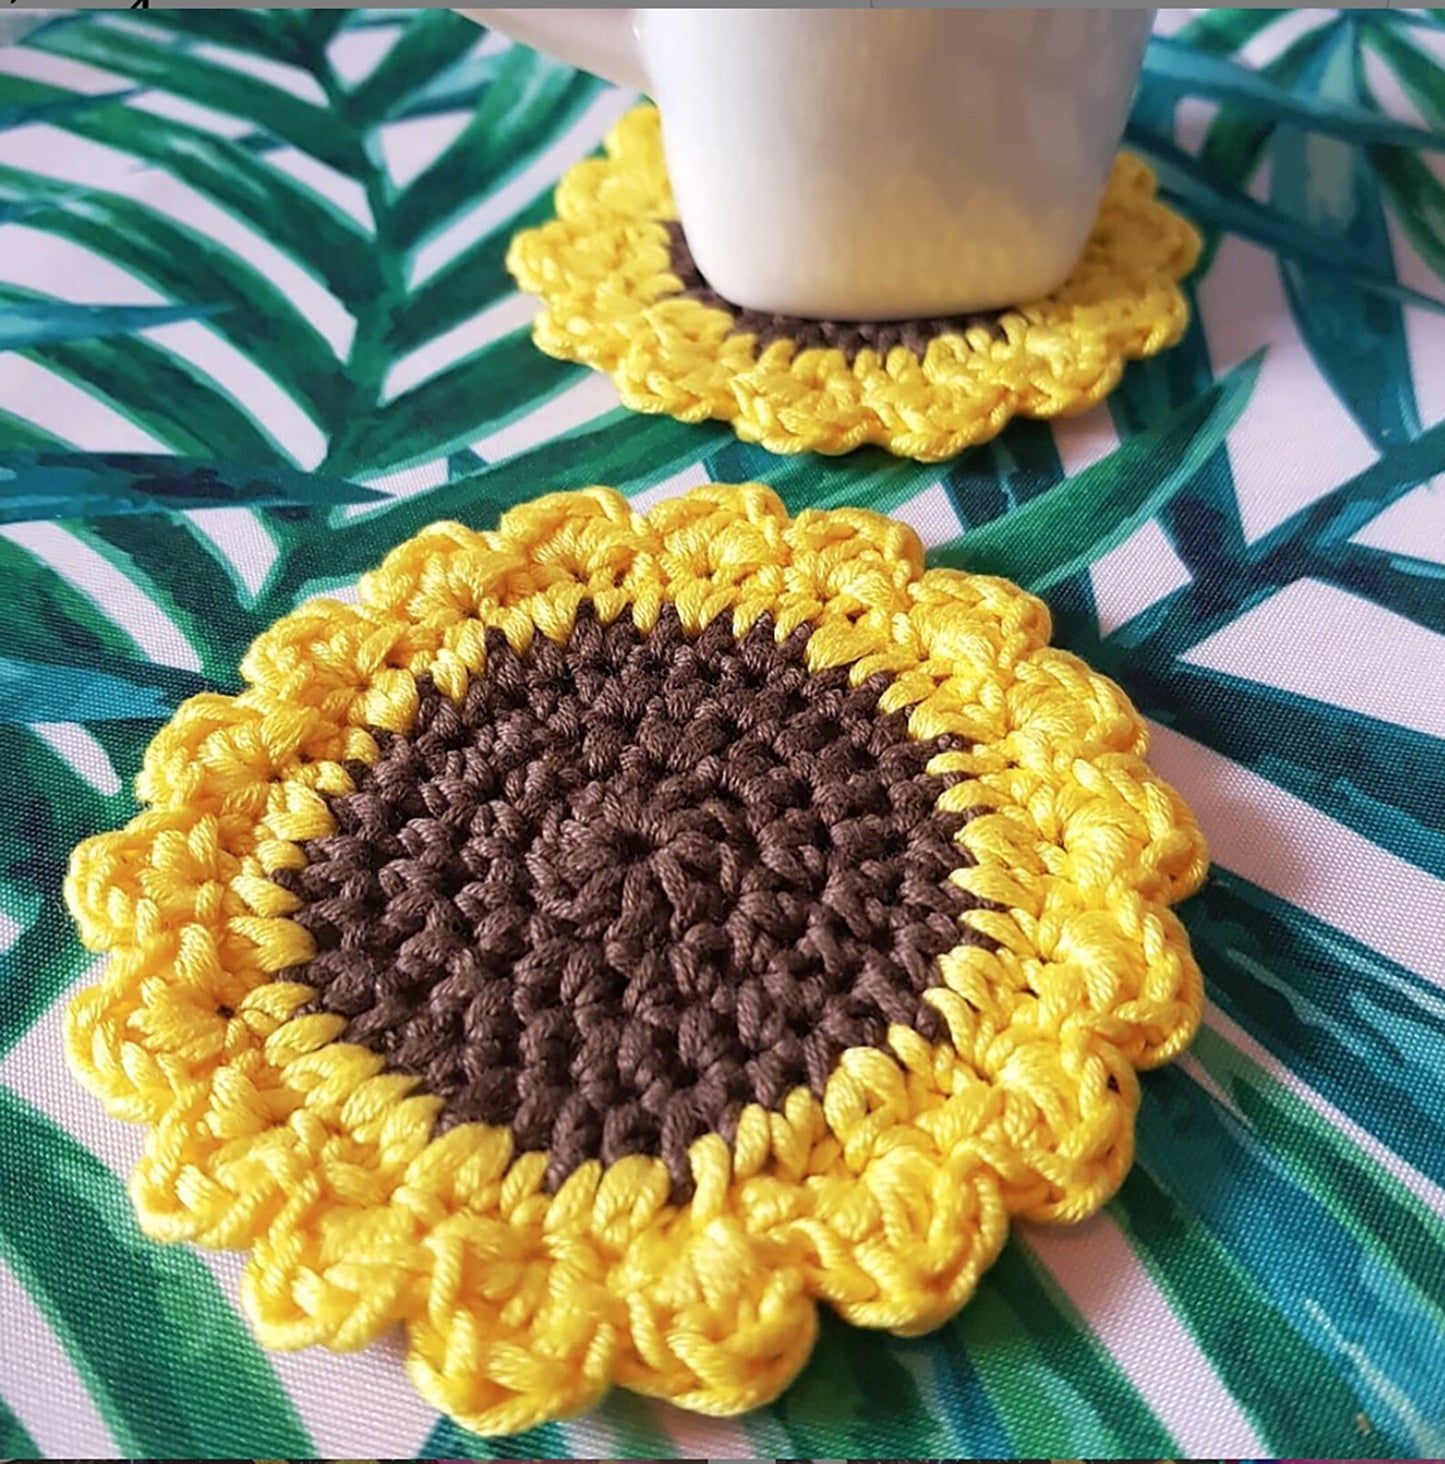 Sunflower Coaster Handmade Doily Crochet Doilies x2